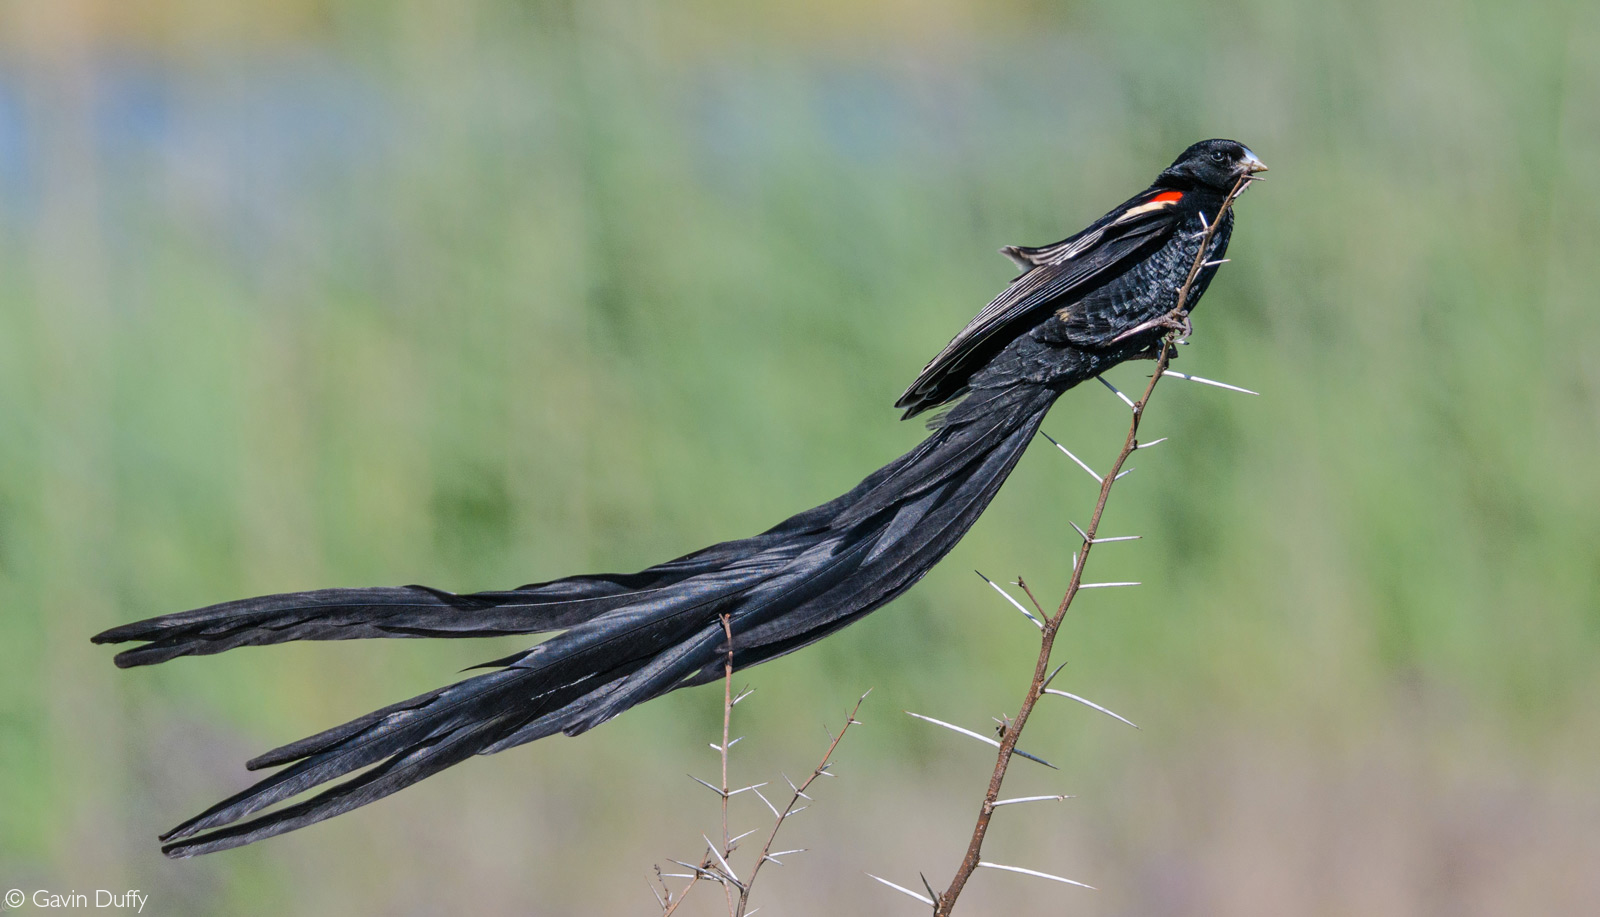 A long-tailed widowbird displays its plumage. Marievale Bird Sanctuary, South Africa © Gavin Duffy